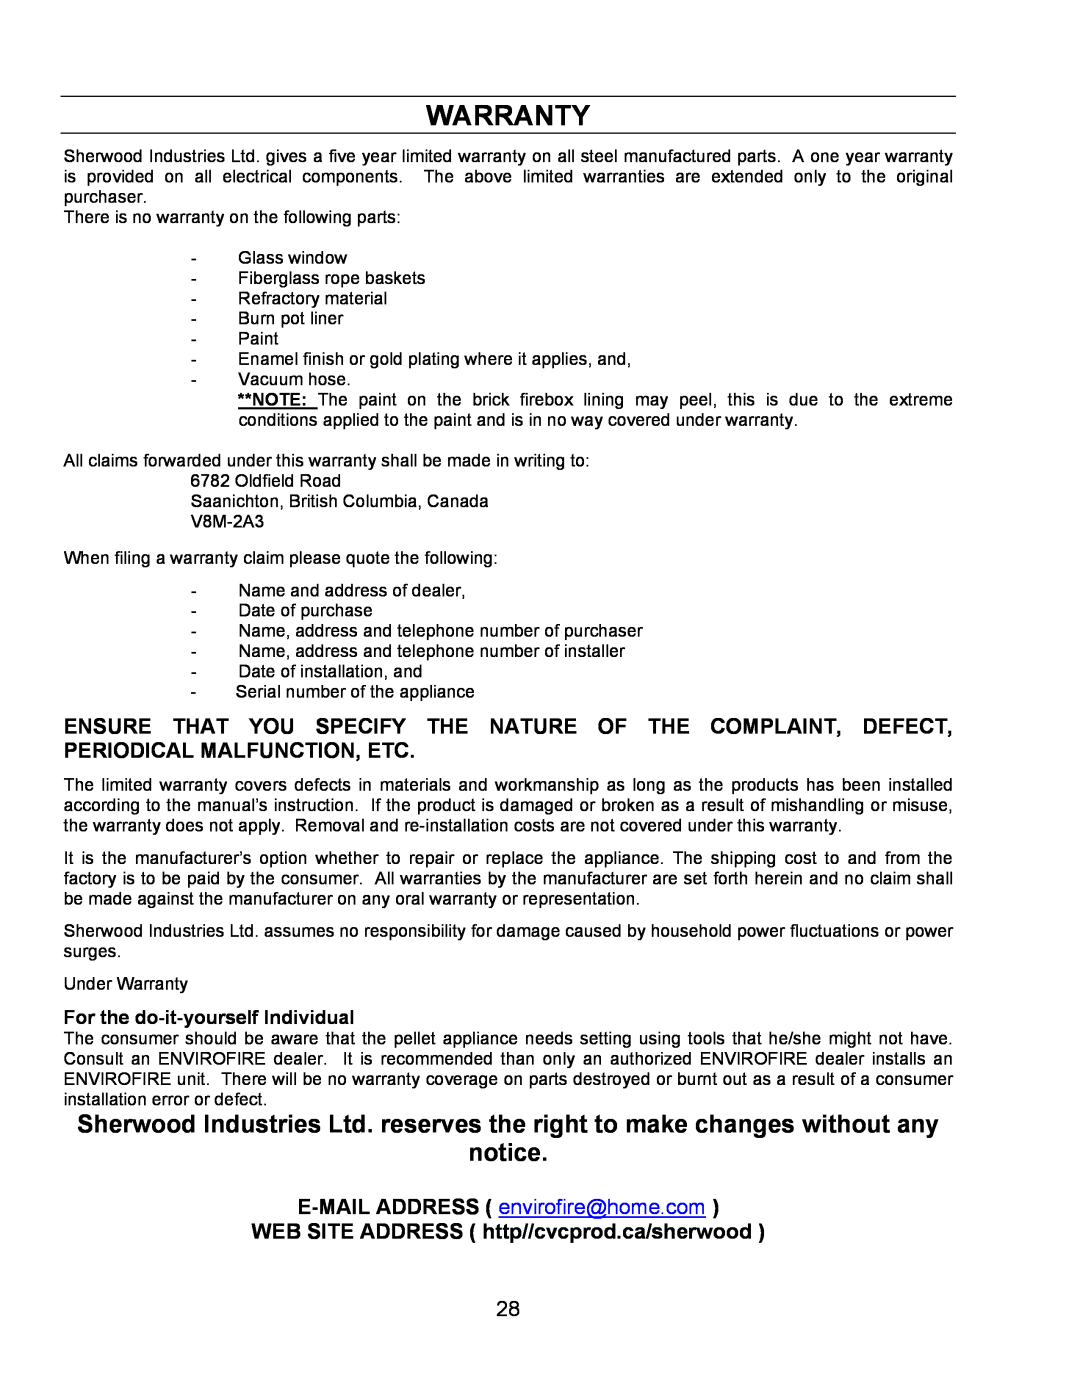 Sherwood EF-3 BAYI technical manual Warranty, WEB SITE ADDRESS http//cvcprod.ca/sherwood, For the do-it-yourselfIndividual 